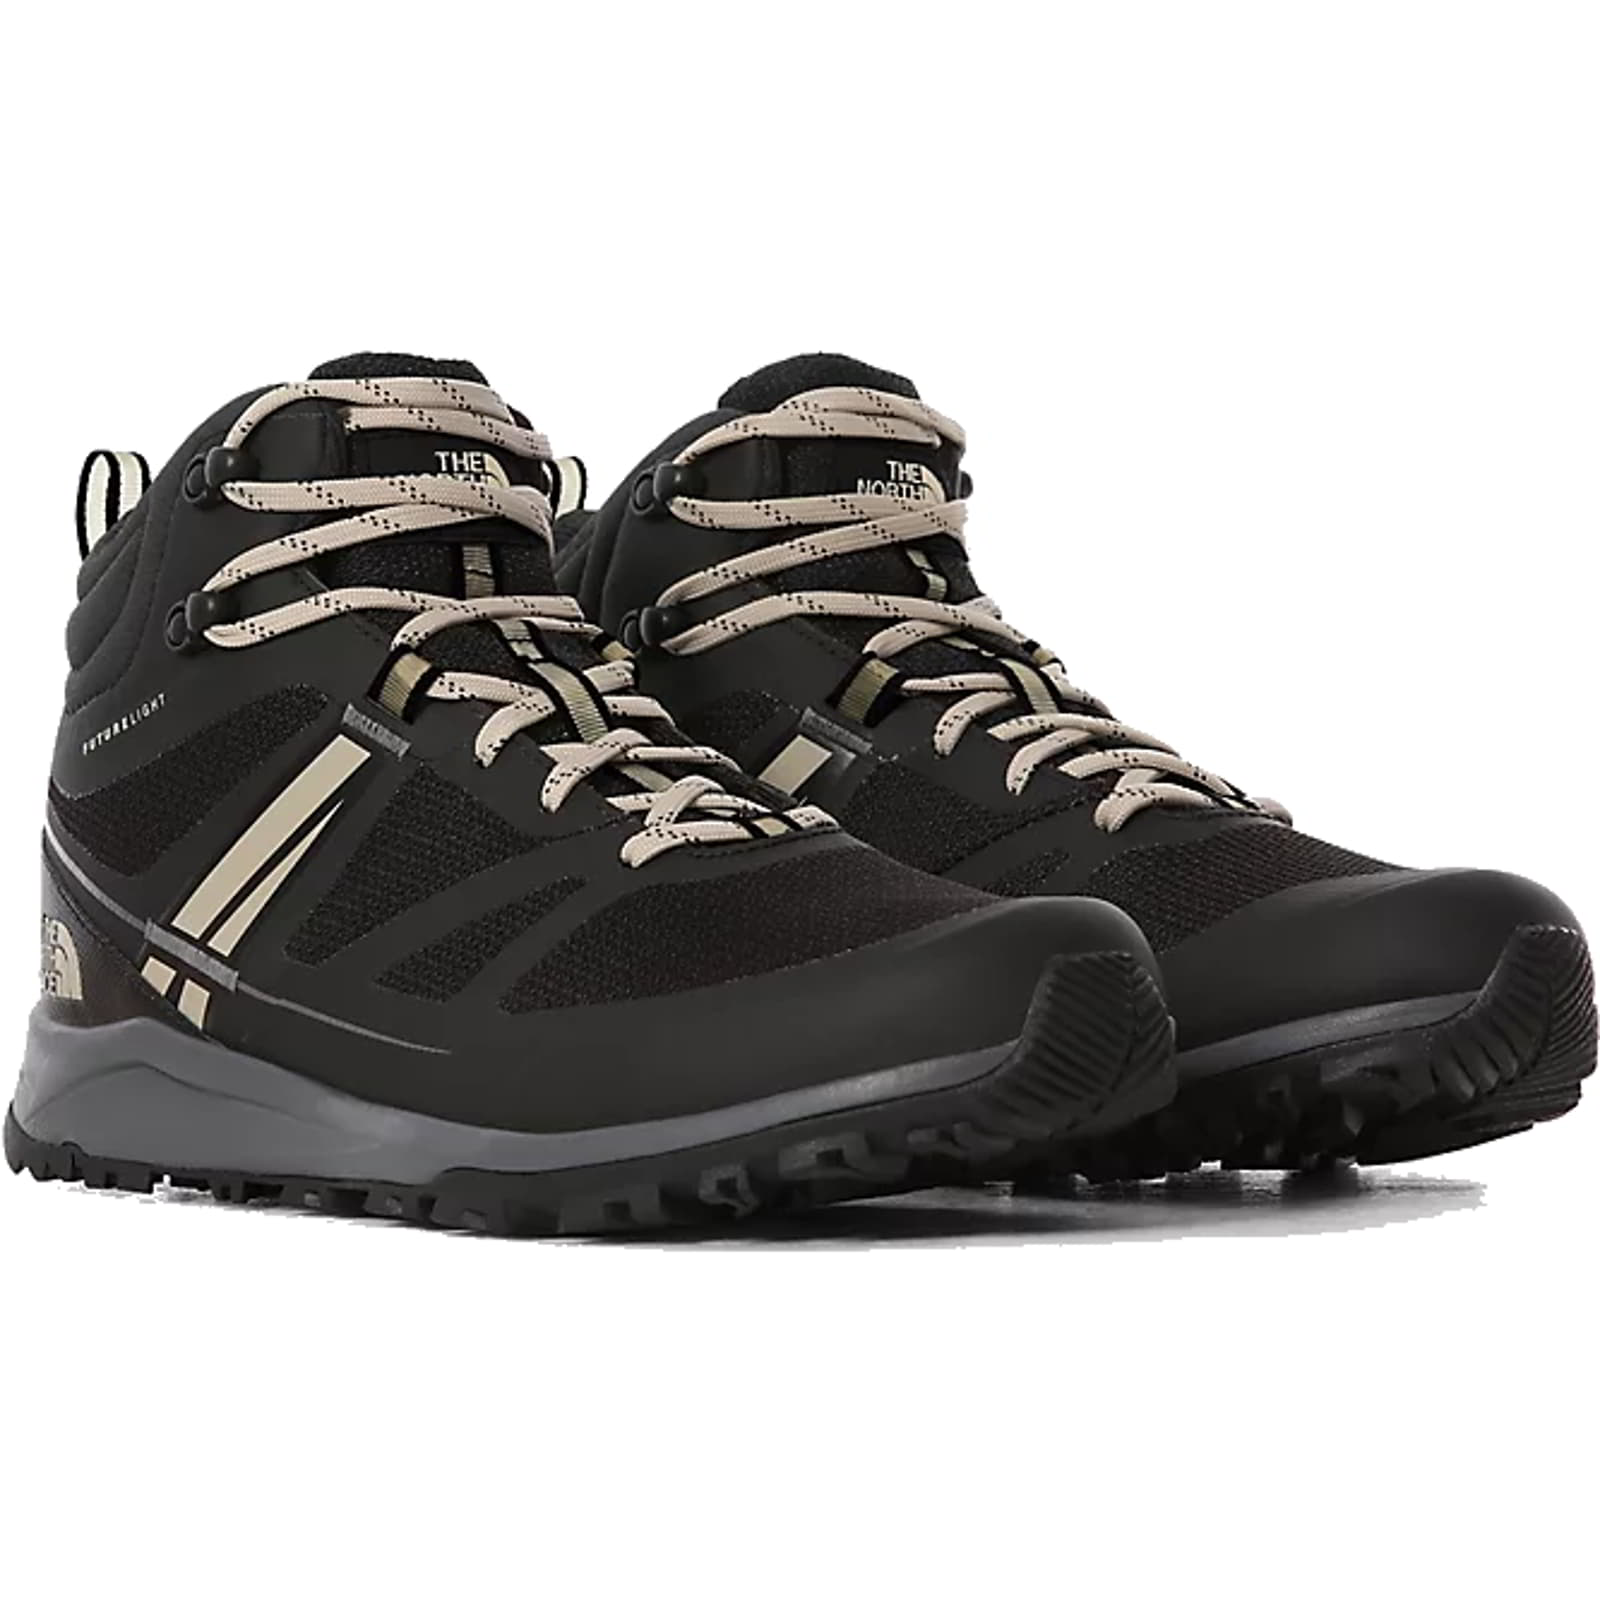 North Face Men's Litewave Mid Futurelight Waterproof Walking Ankle Boots - UK 9 / US 10